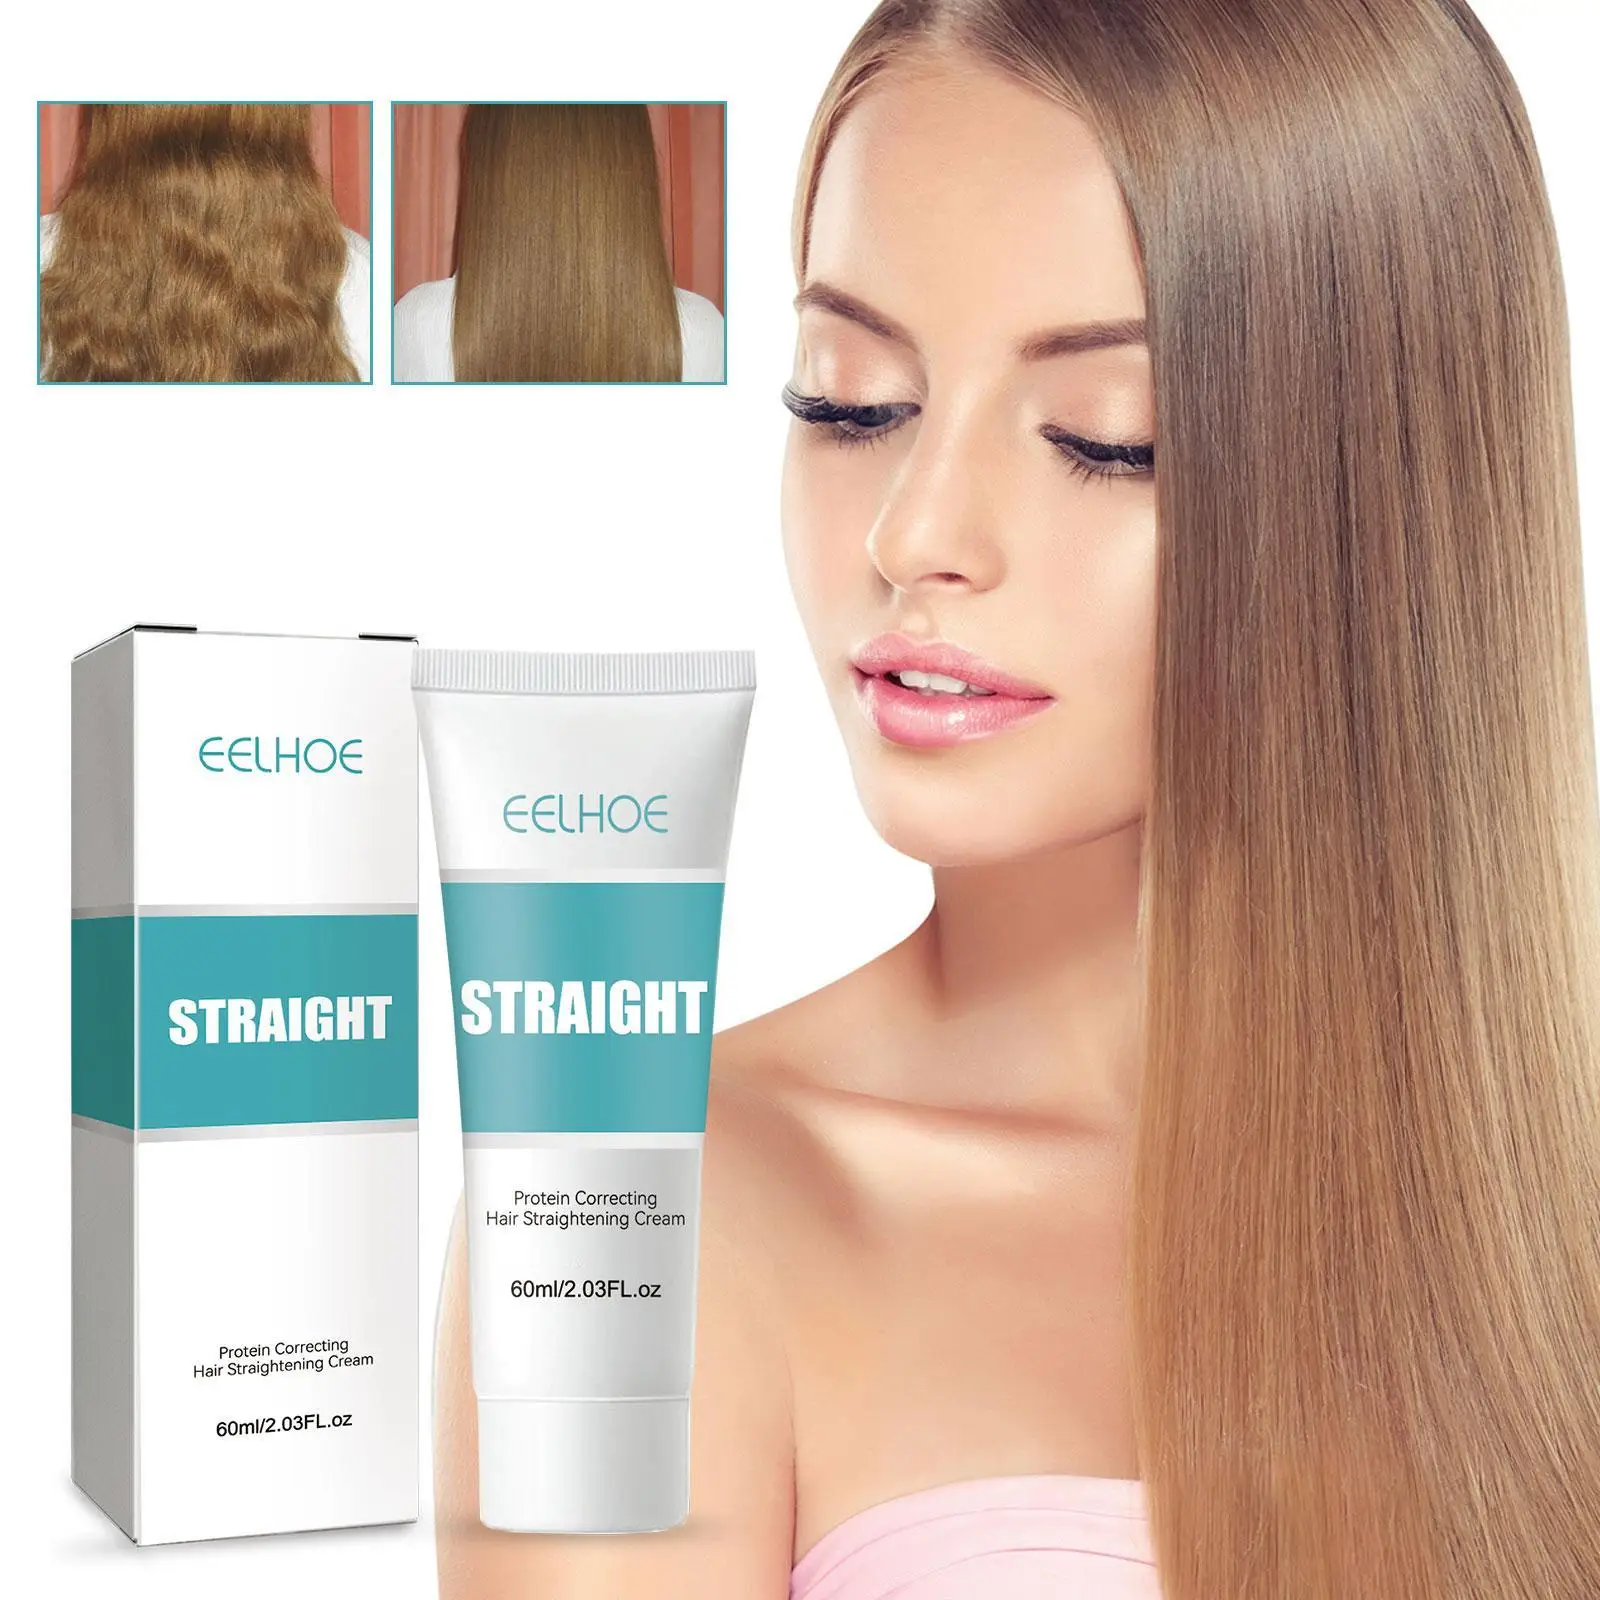 

60ml Keratin Protein Correcting Hair Straightening Cream Replenish Hair Nutrition And Moisture Does Not Hurt Hair Easily Soften